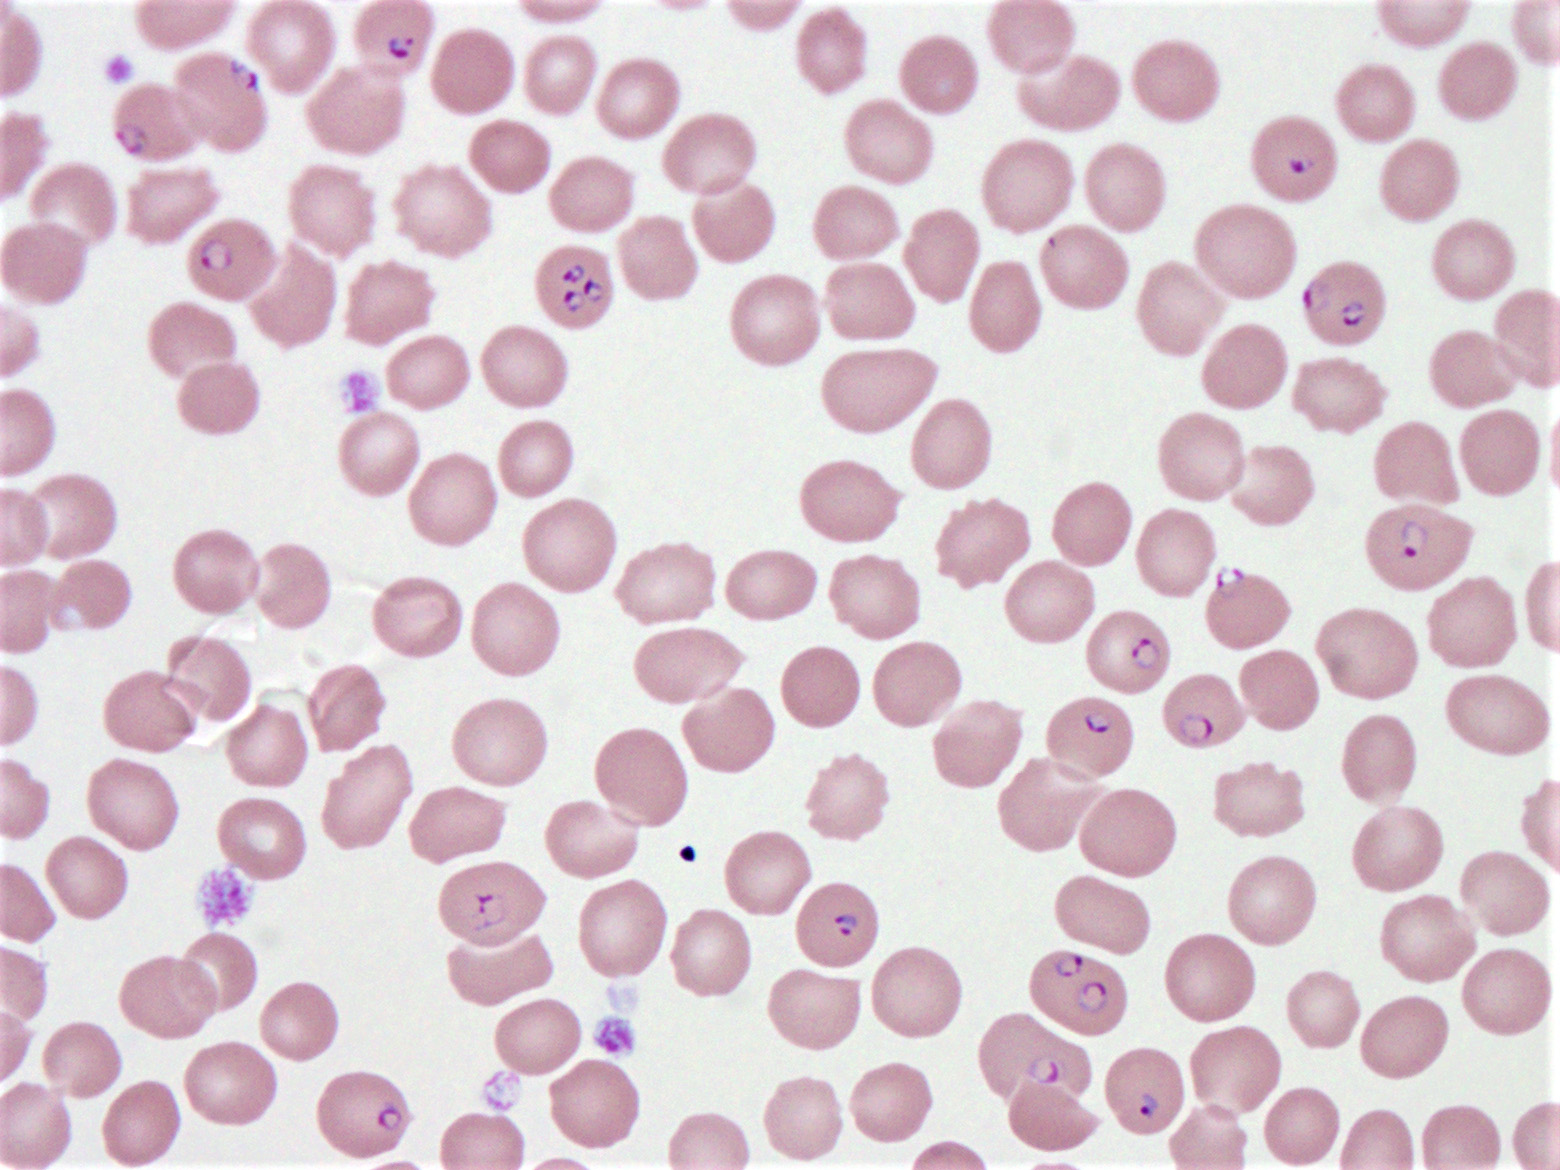 Plasmodium falciparum (blood smear)